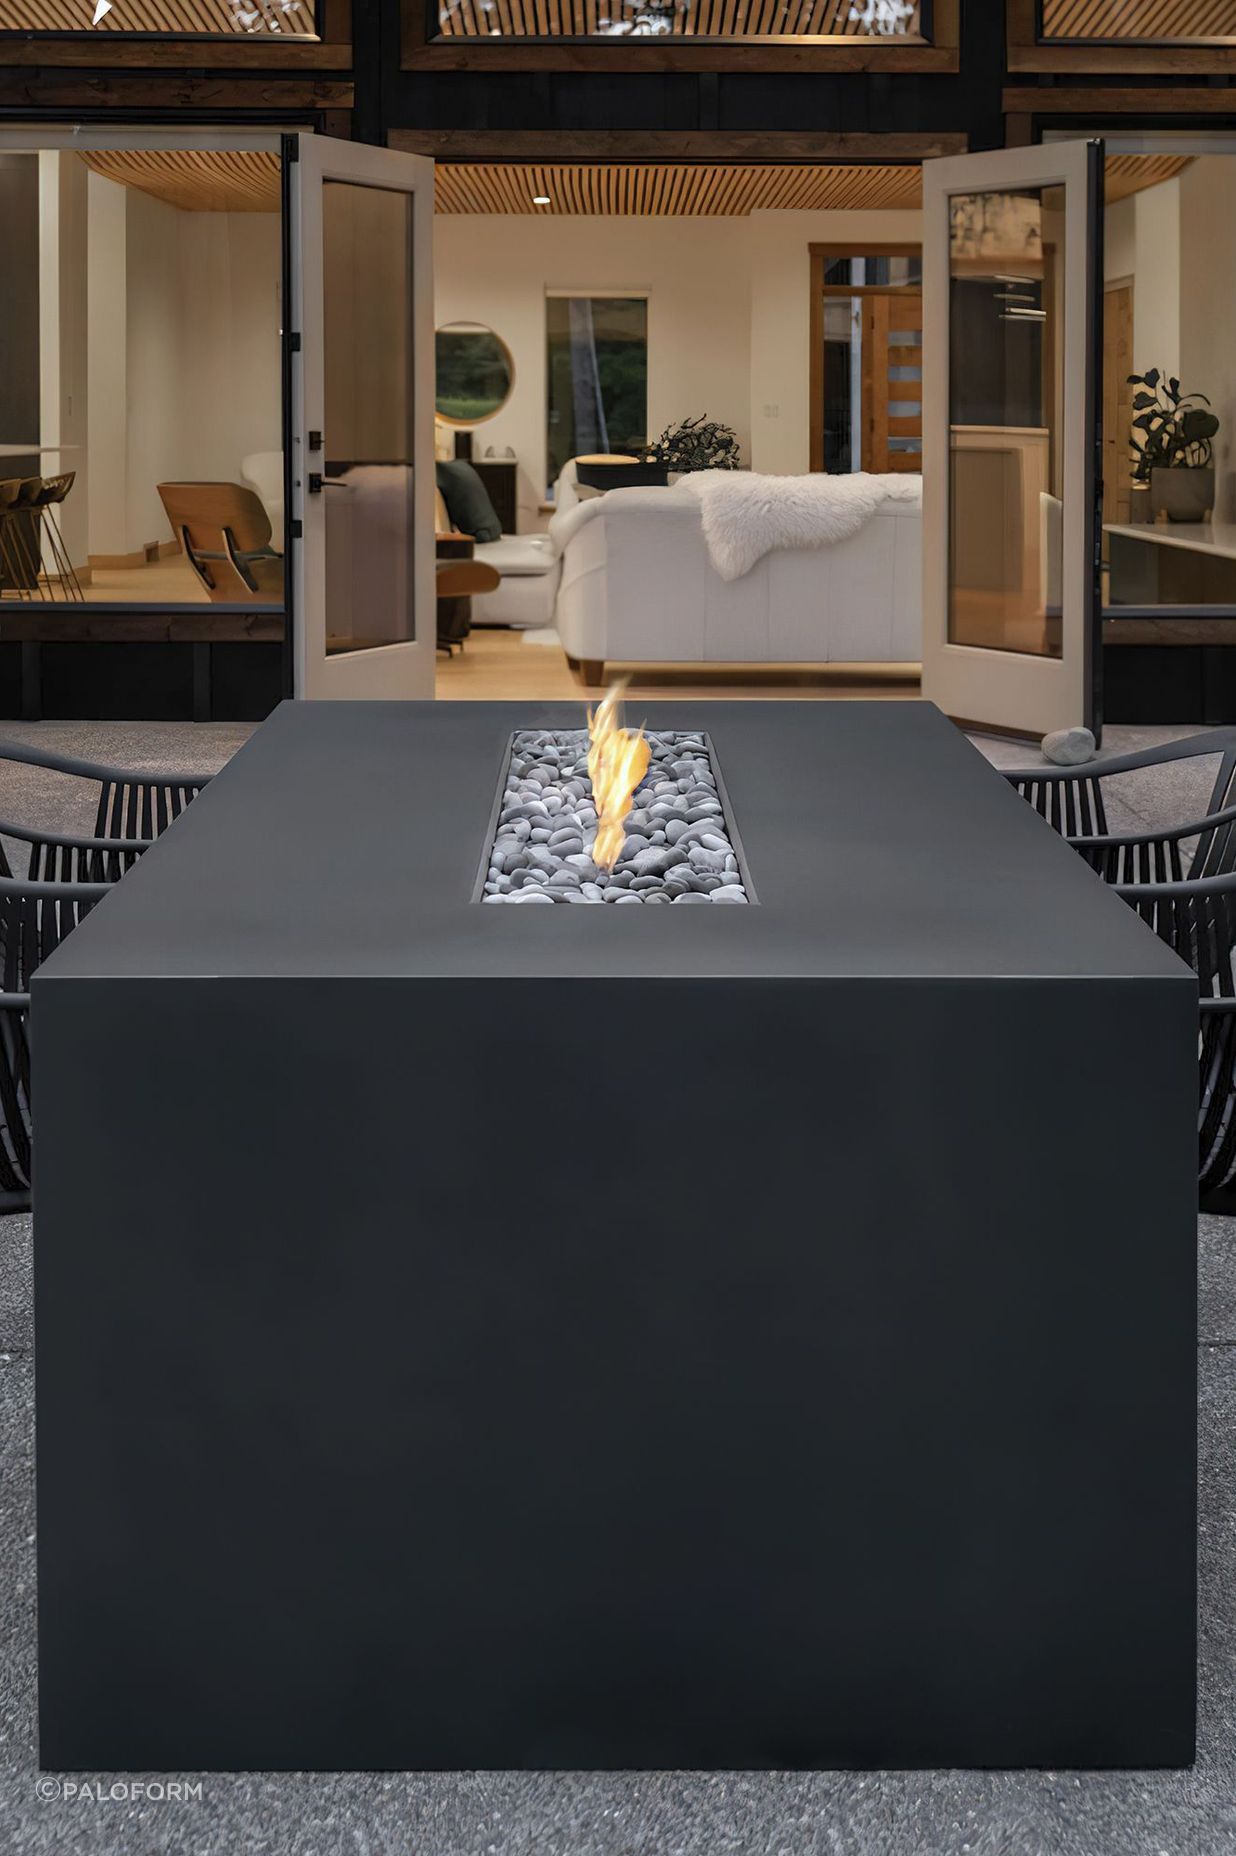 The Nimbus Fire Pit Table by Paloform